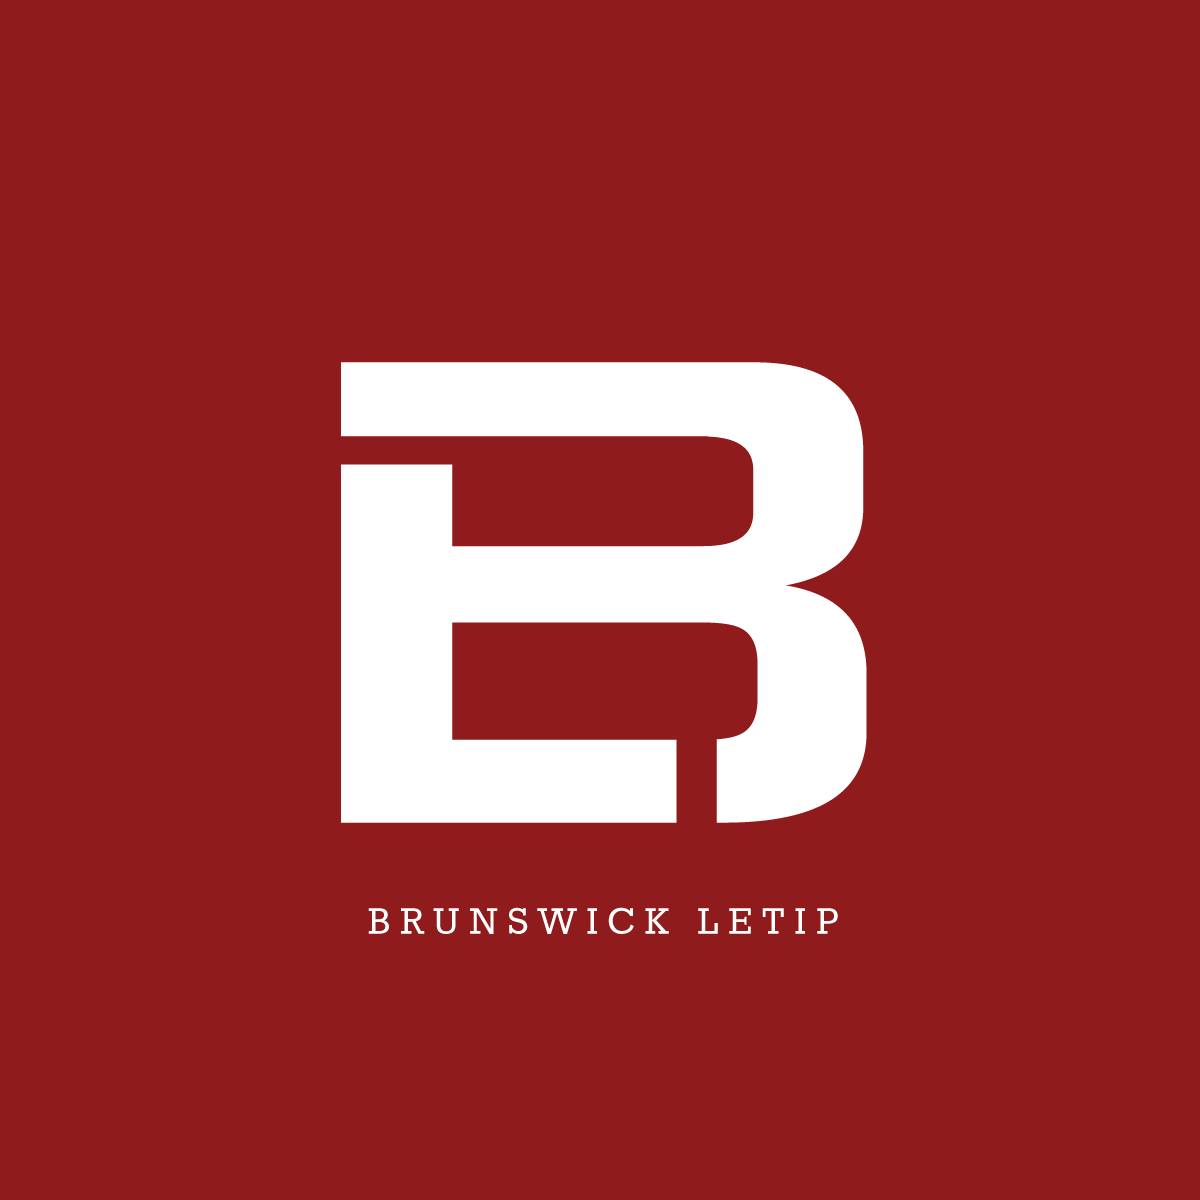 north brunswick township logo